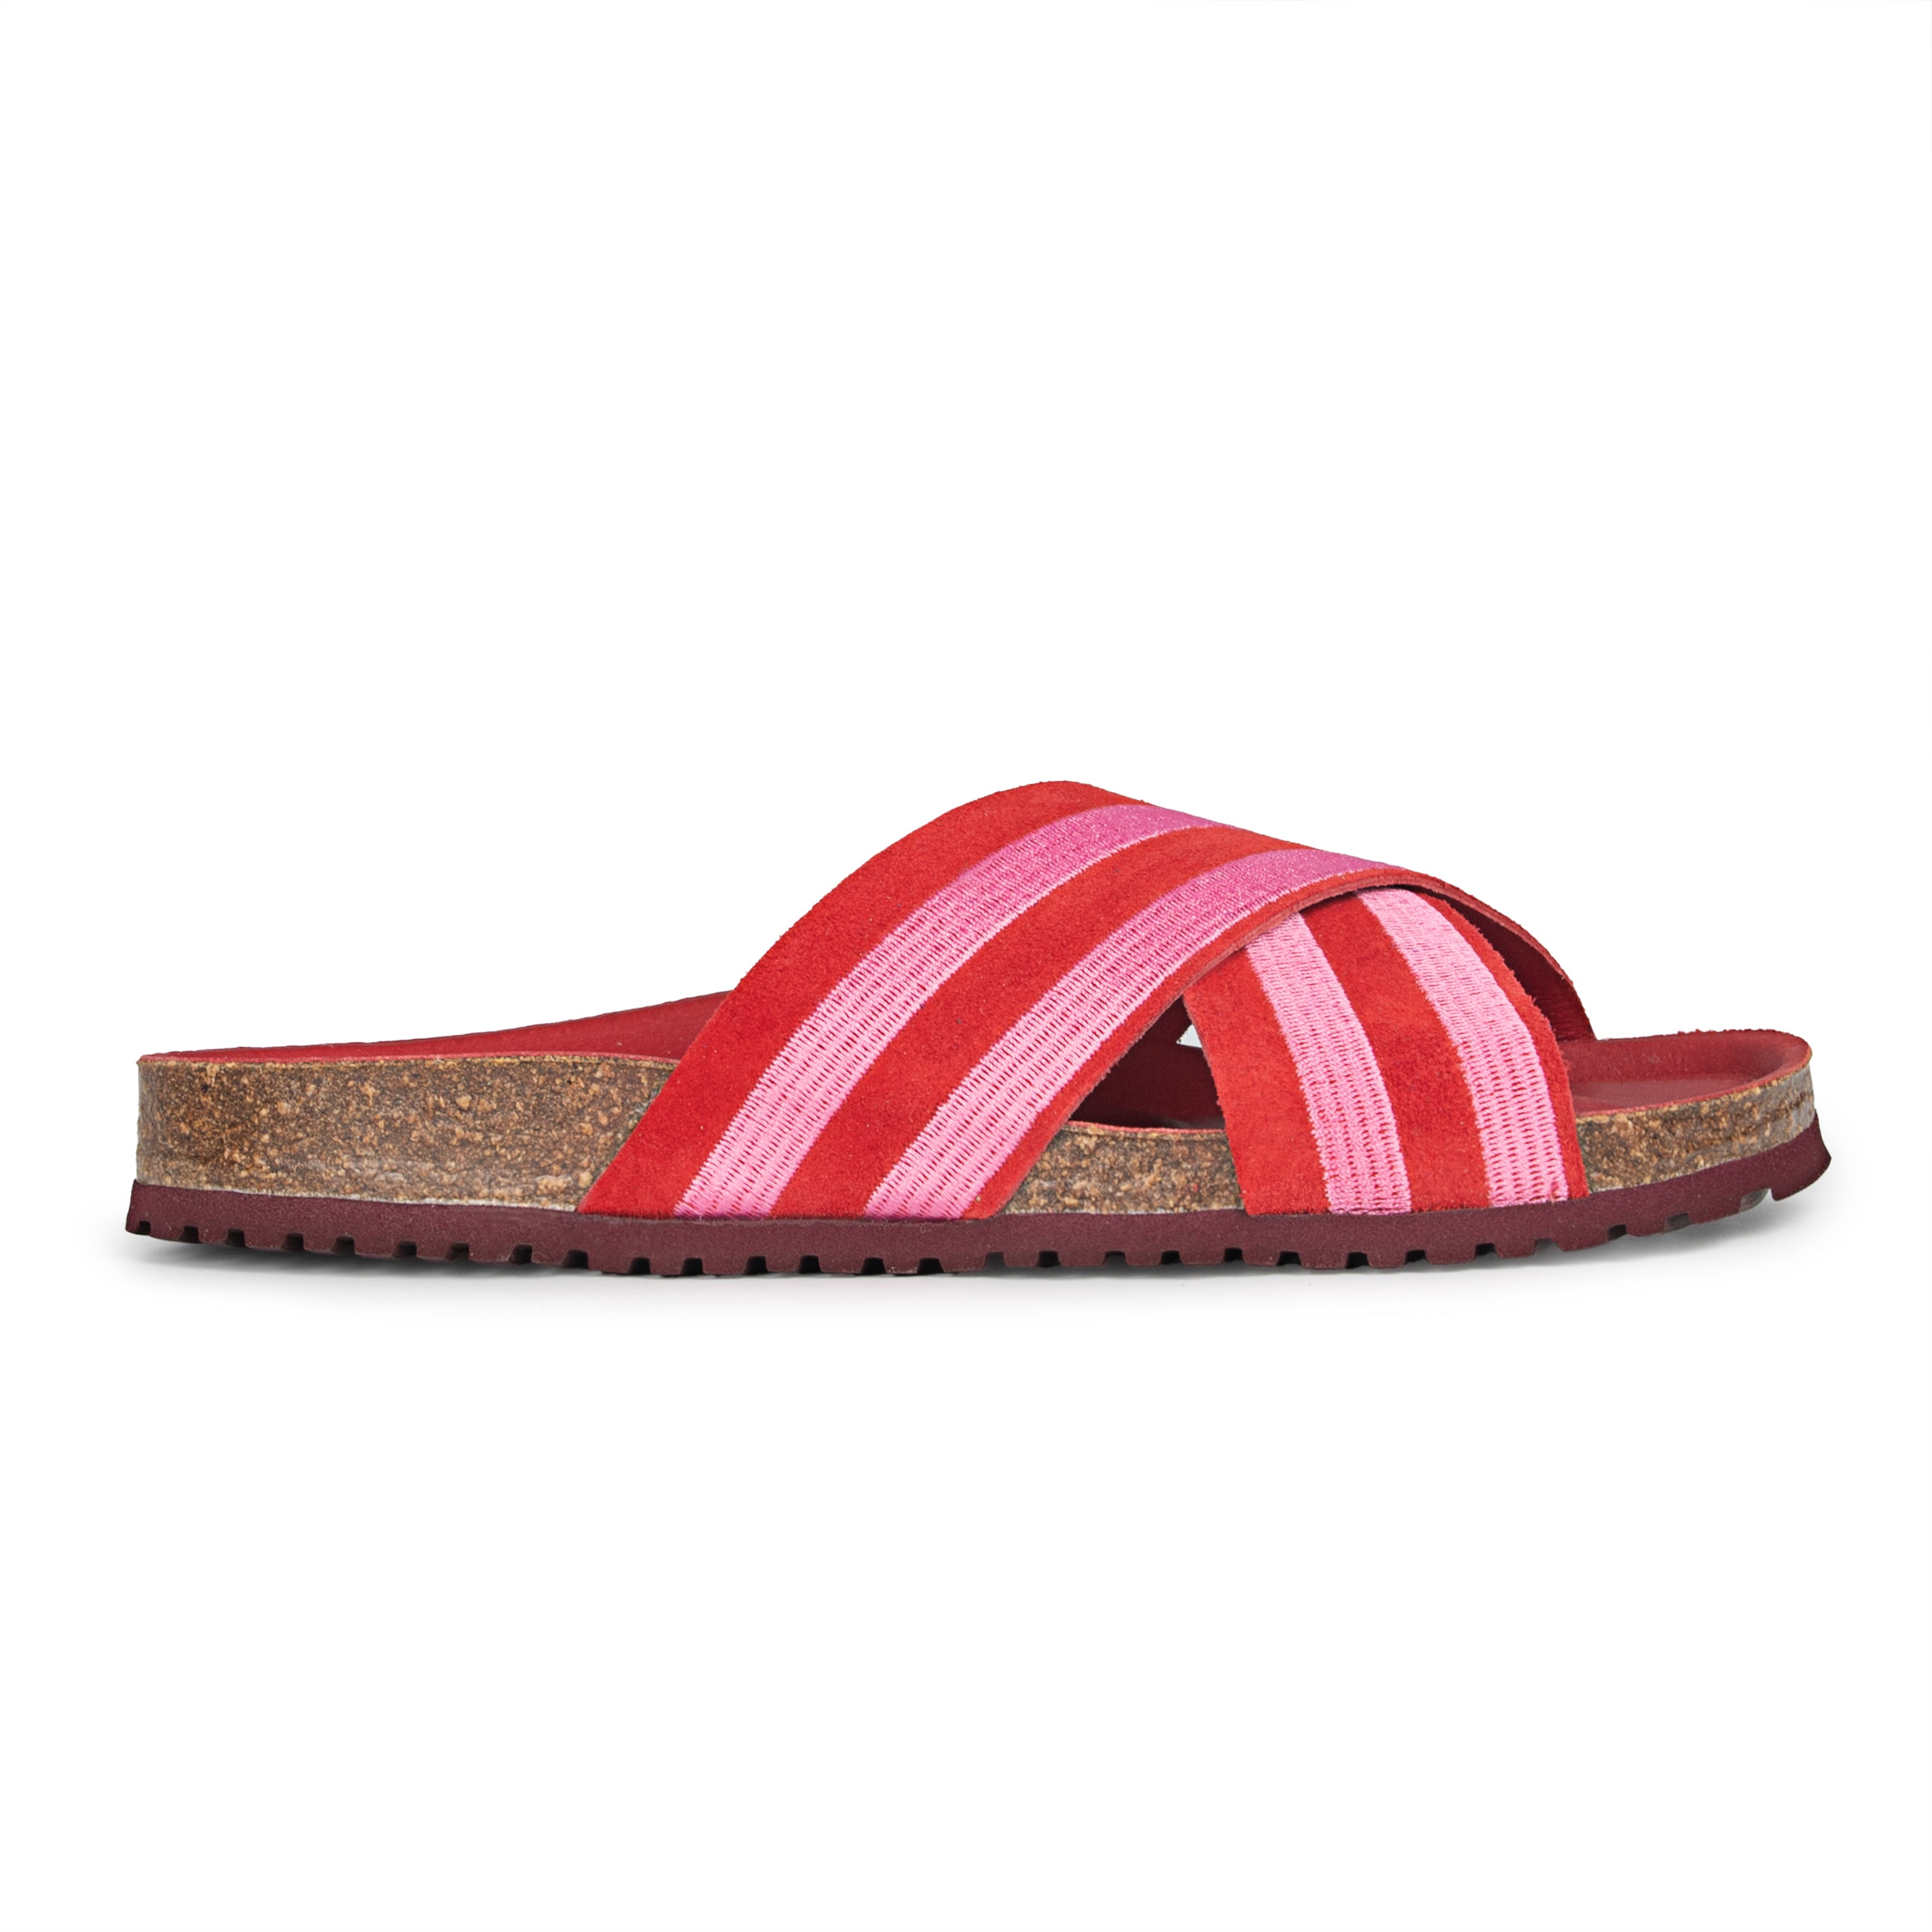 Candy Striped Sandal